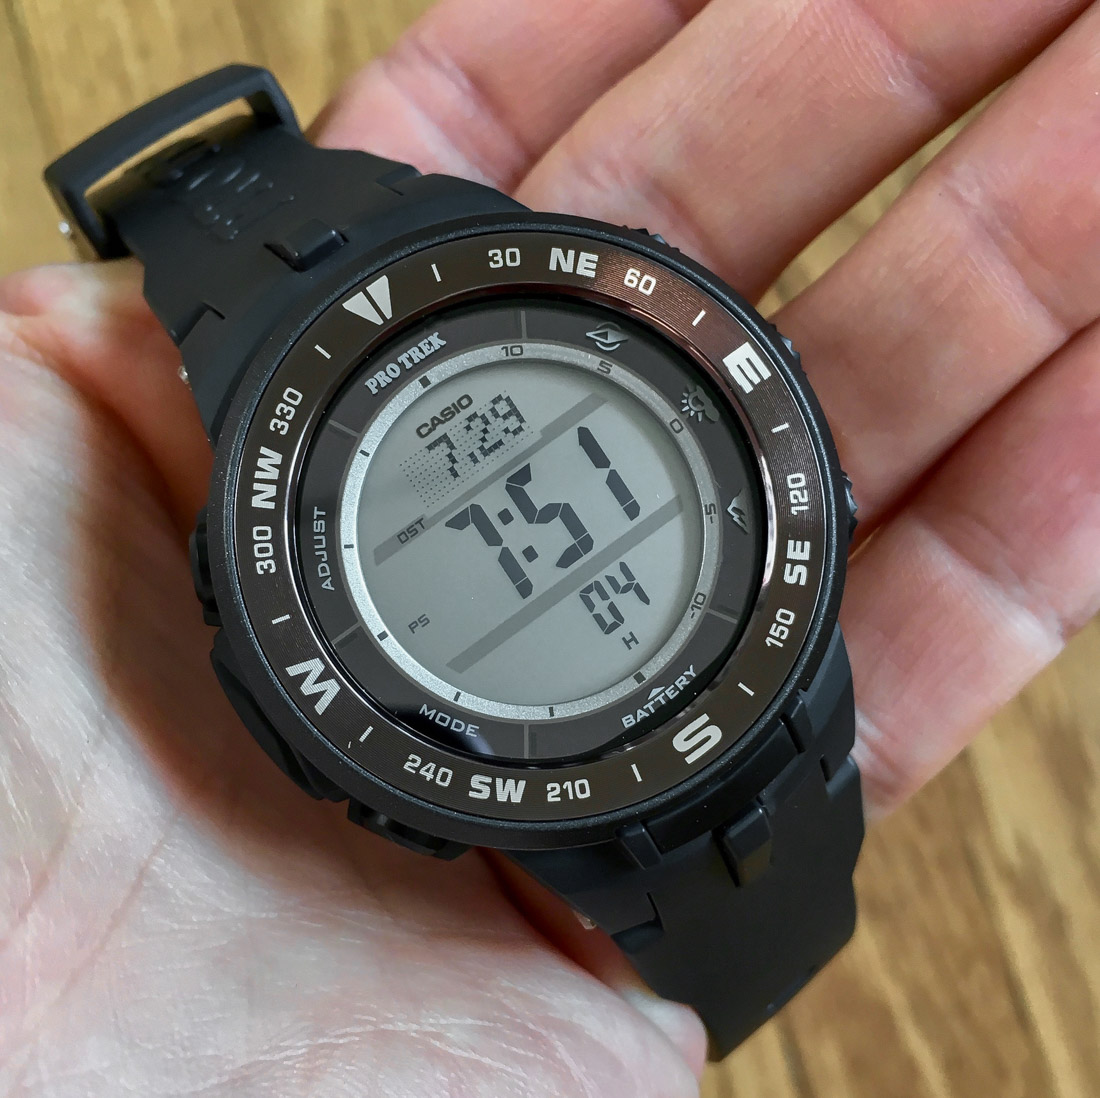 Casio Protrek Prg330 Outdoor Smartwatch Review Ablogtowatch